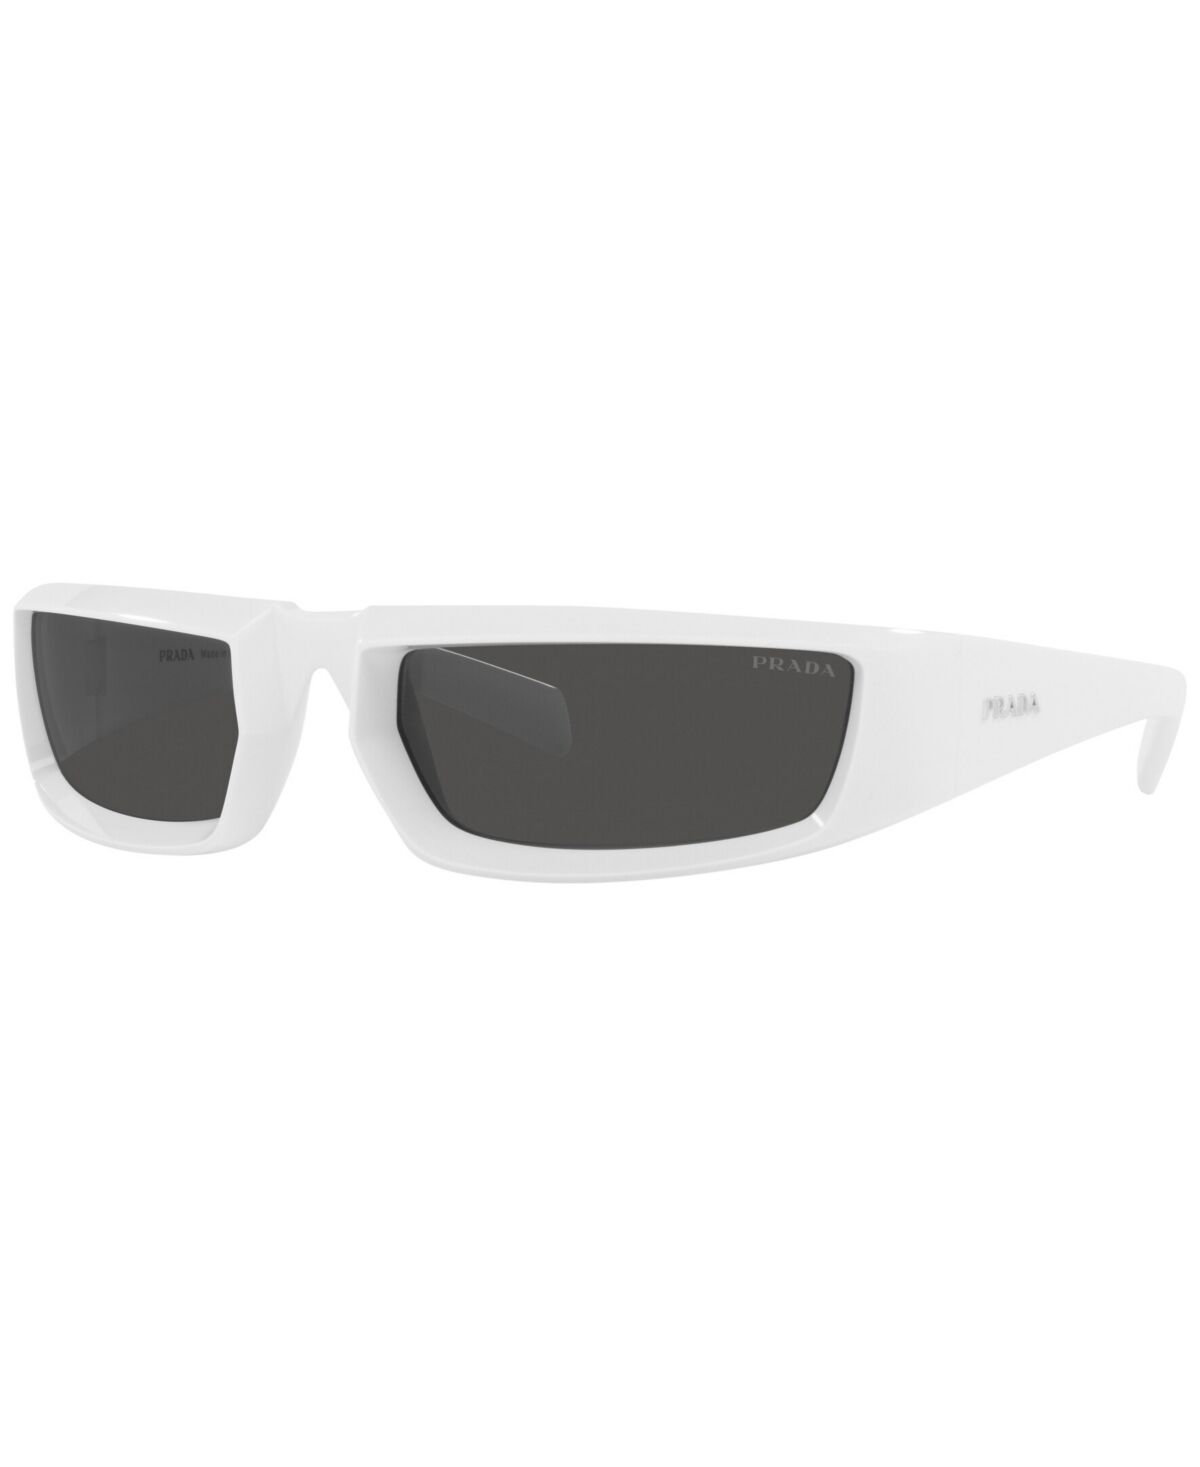 Prada Men's Sunglasses, Pr 25YS - White